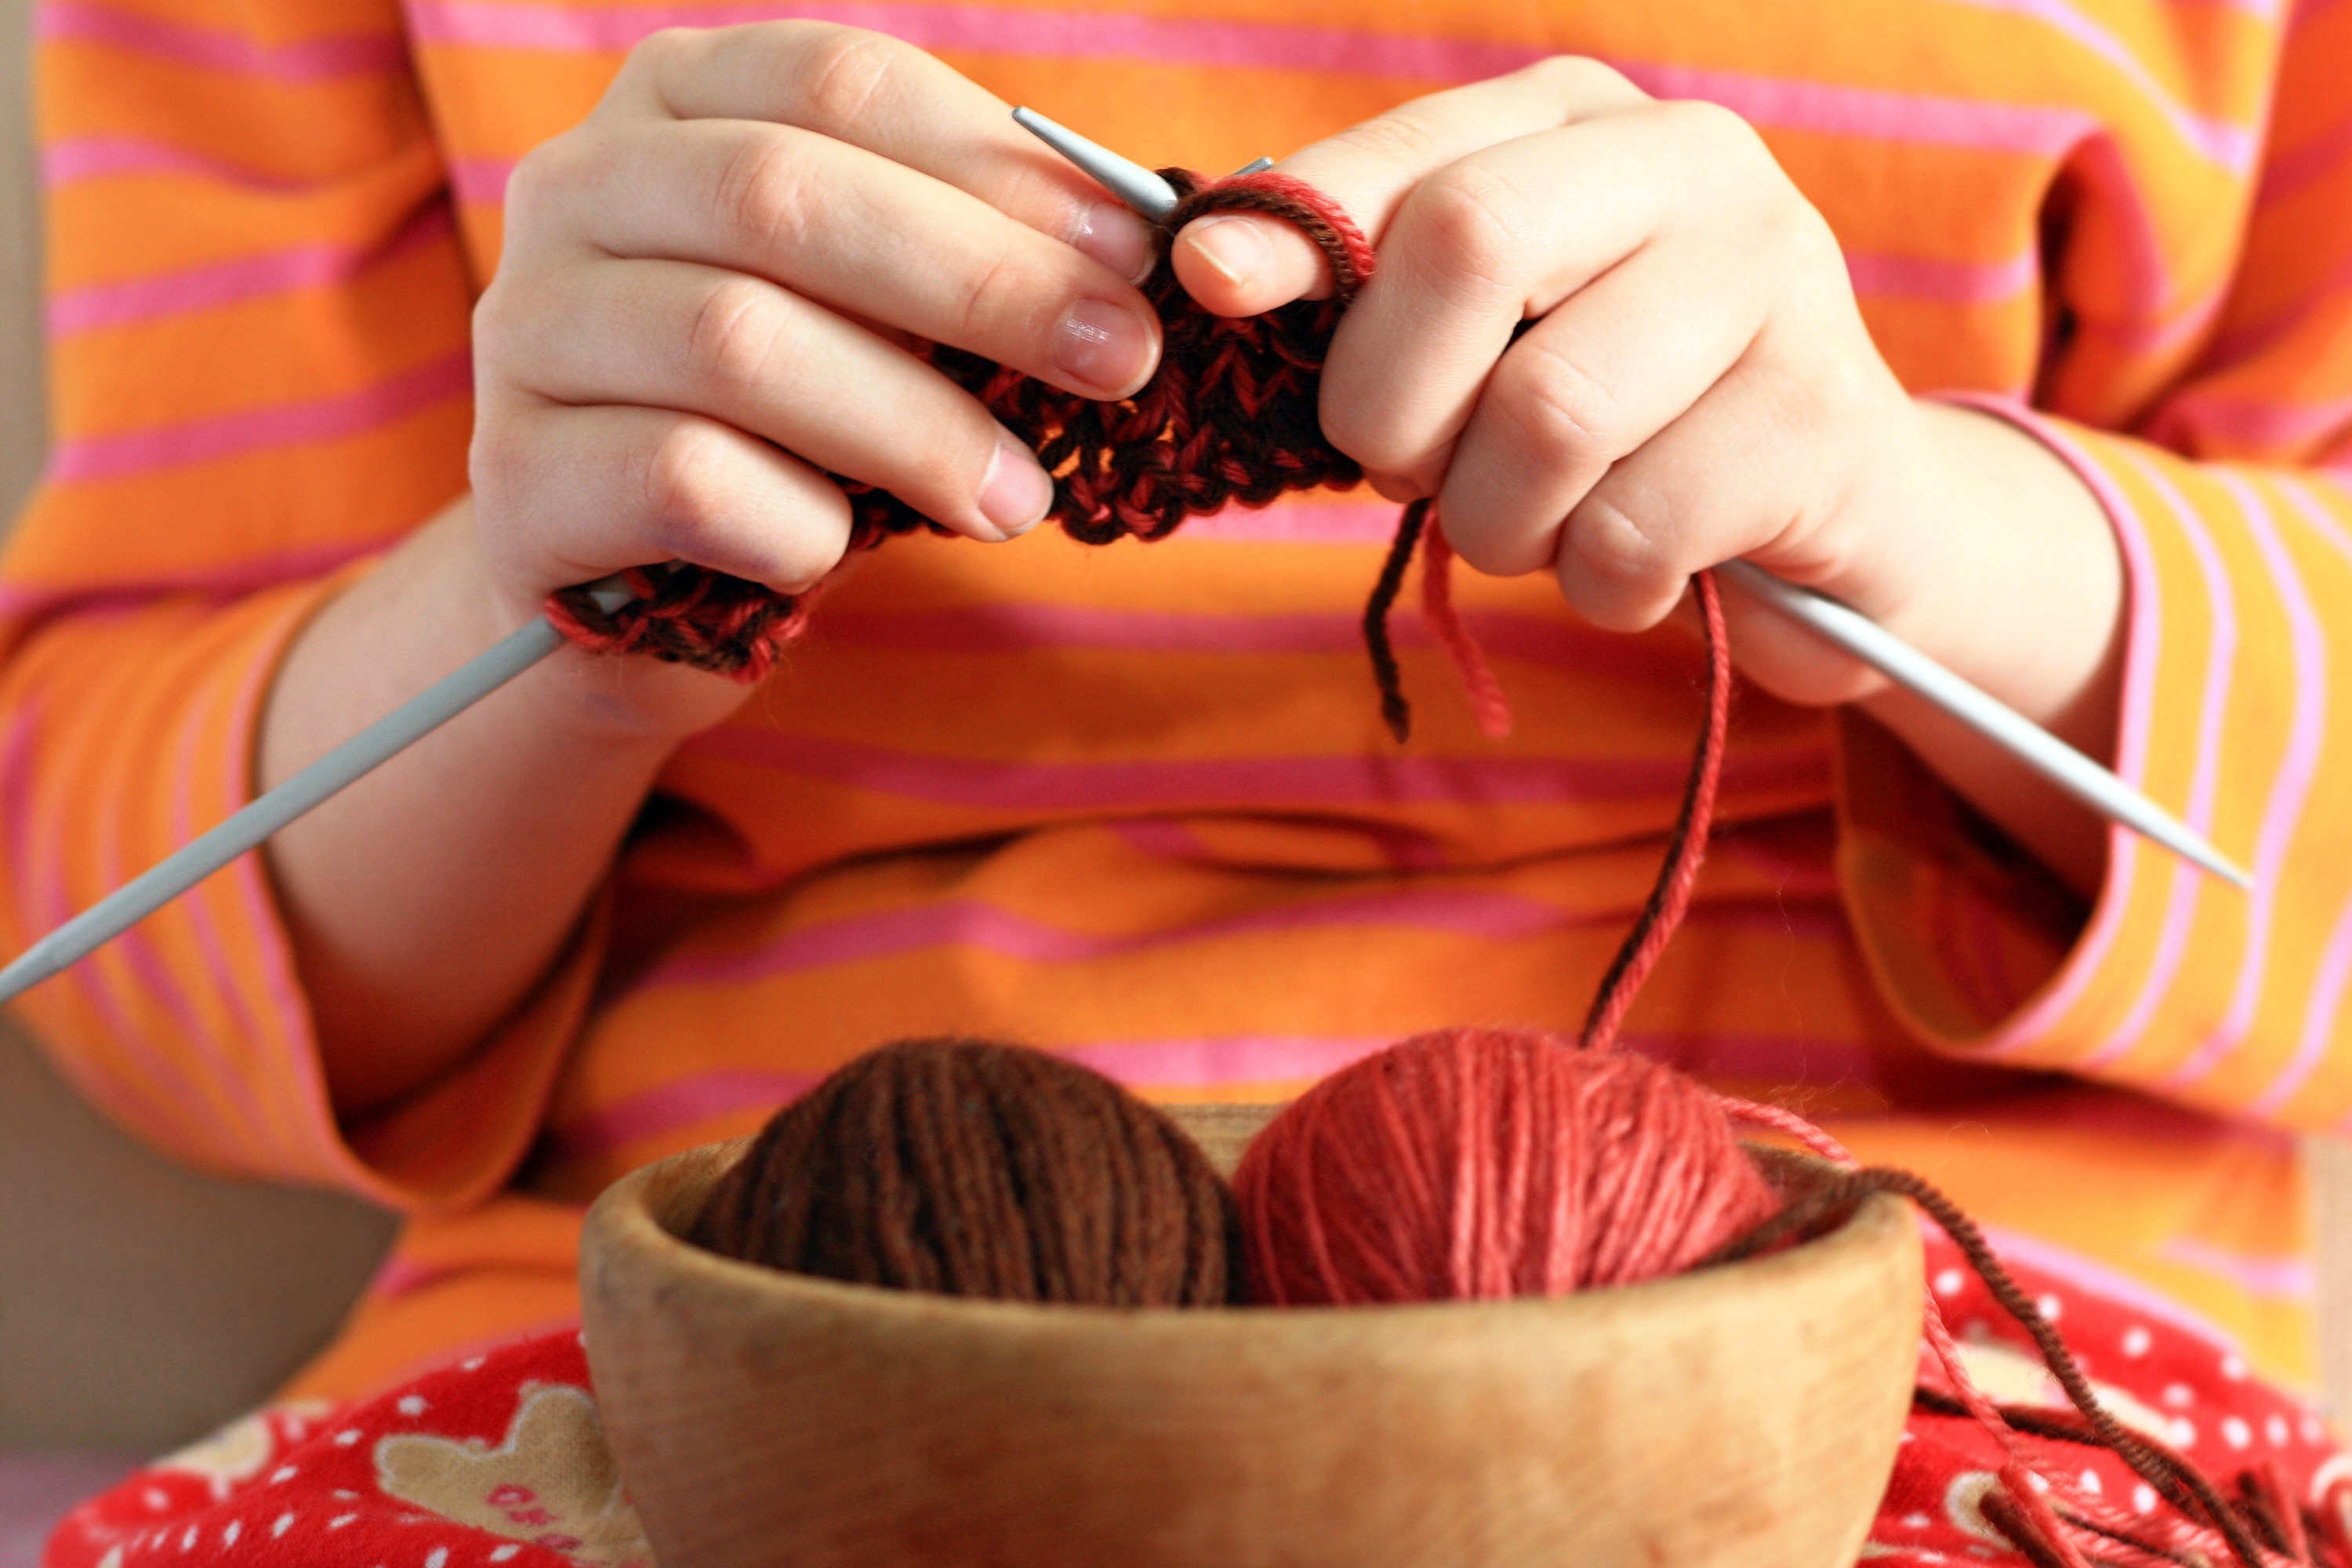 Women knitting with balls of yarn